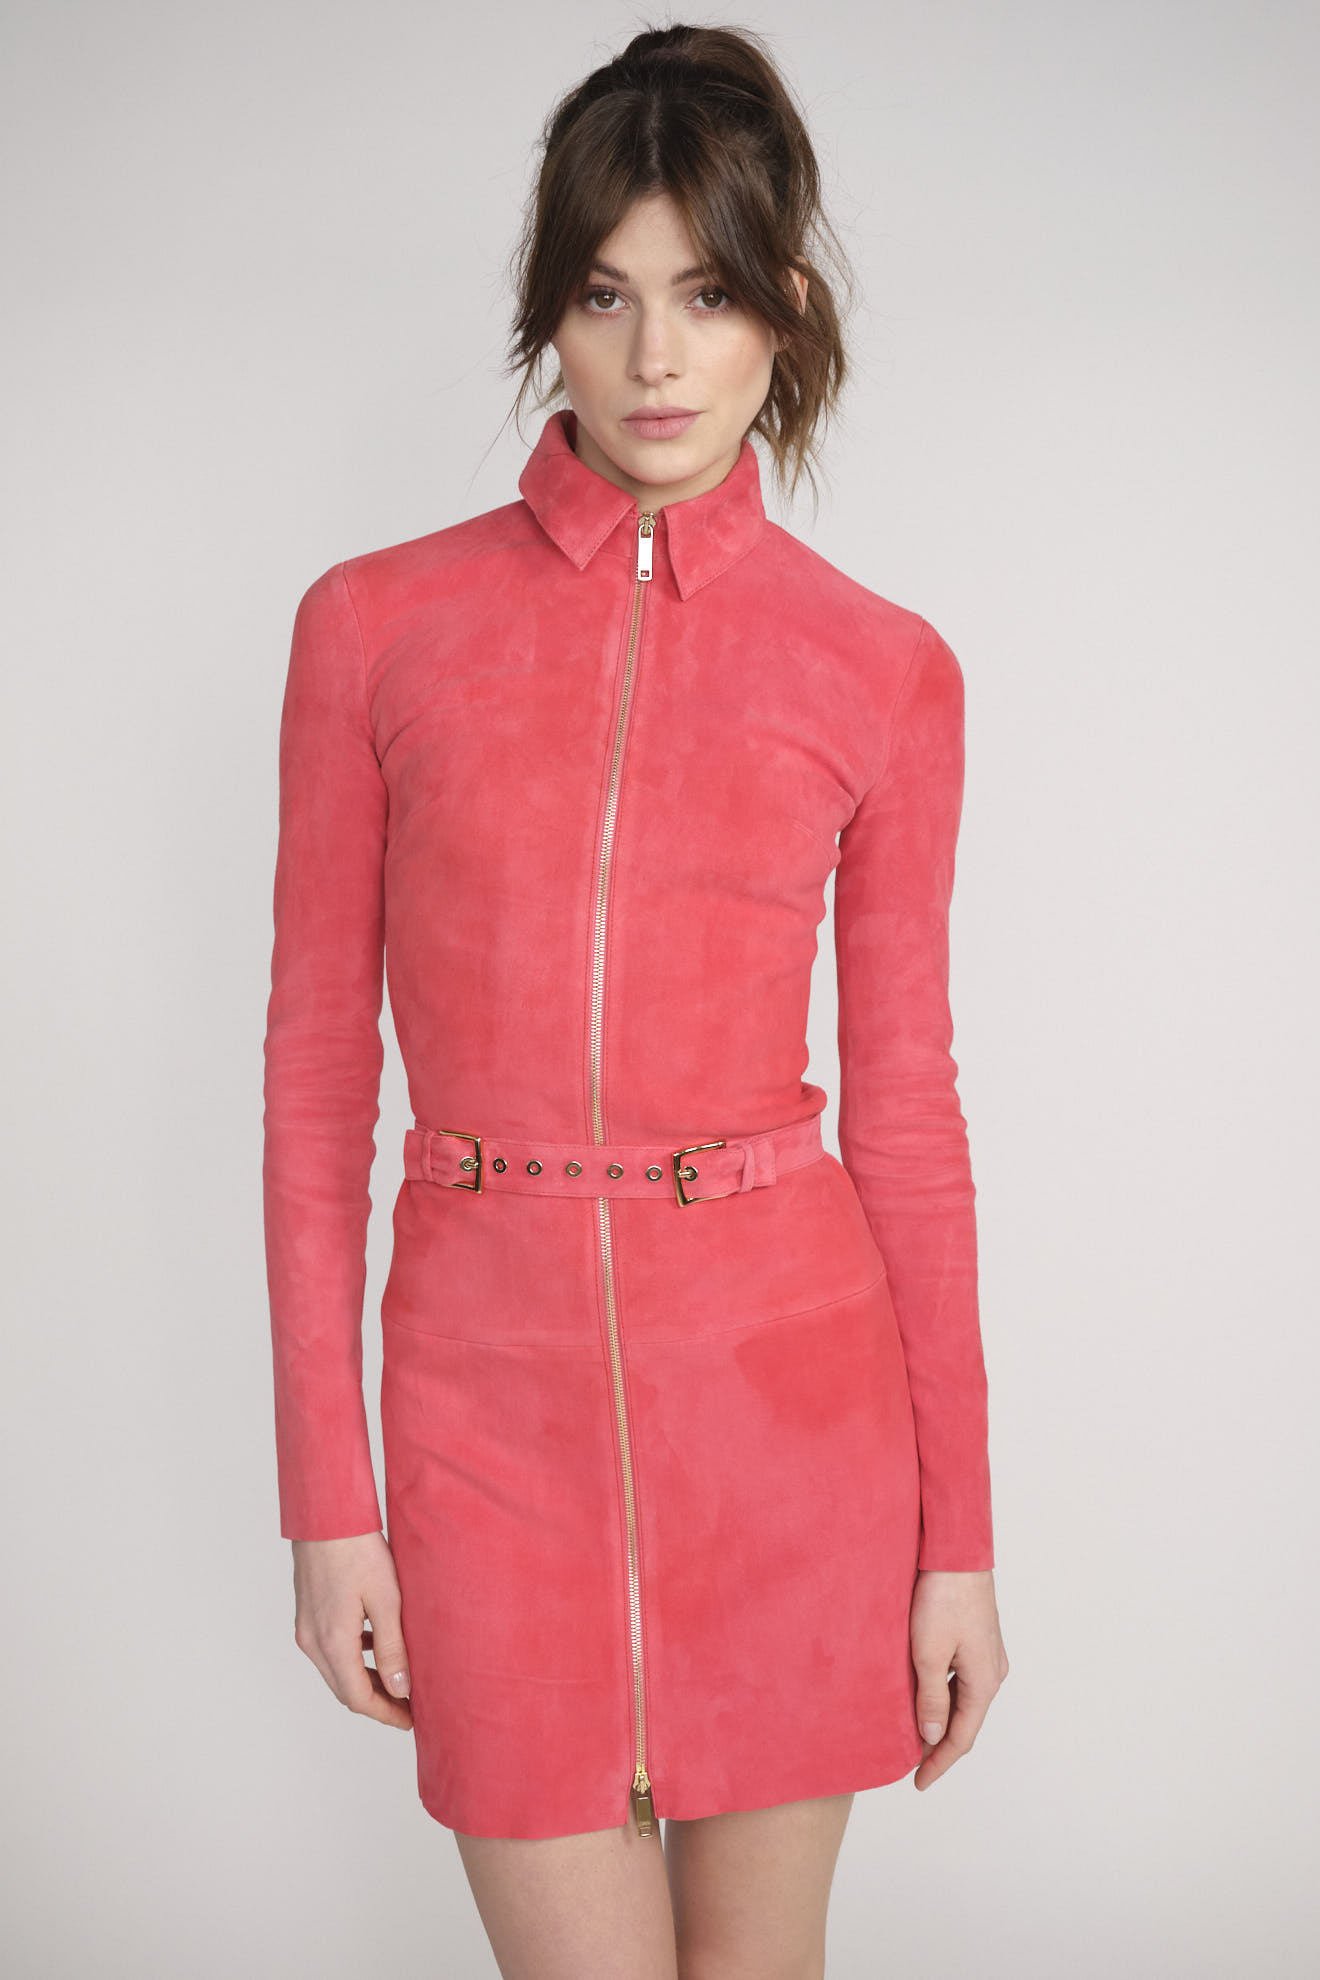 jitrois Agatha - Mini dress with waist belt in lamb leather orange 36